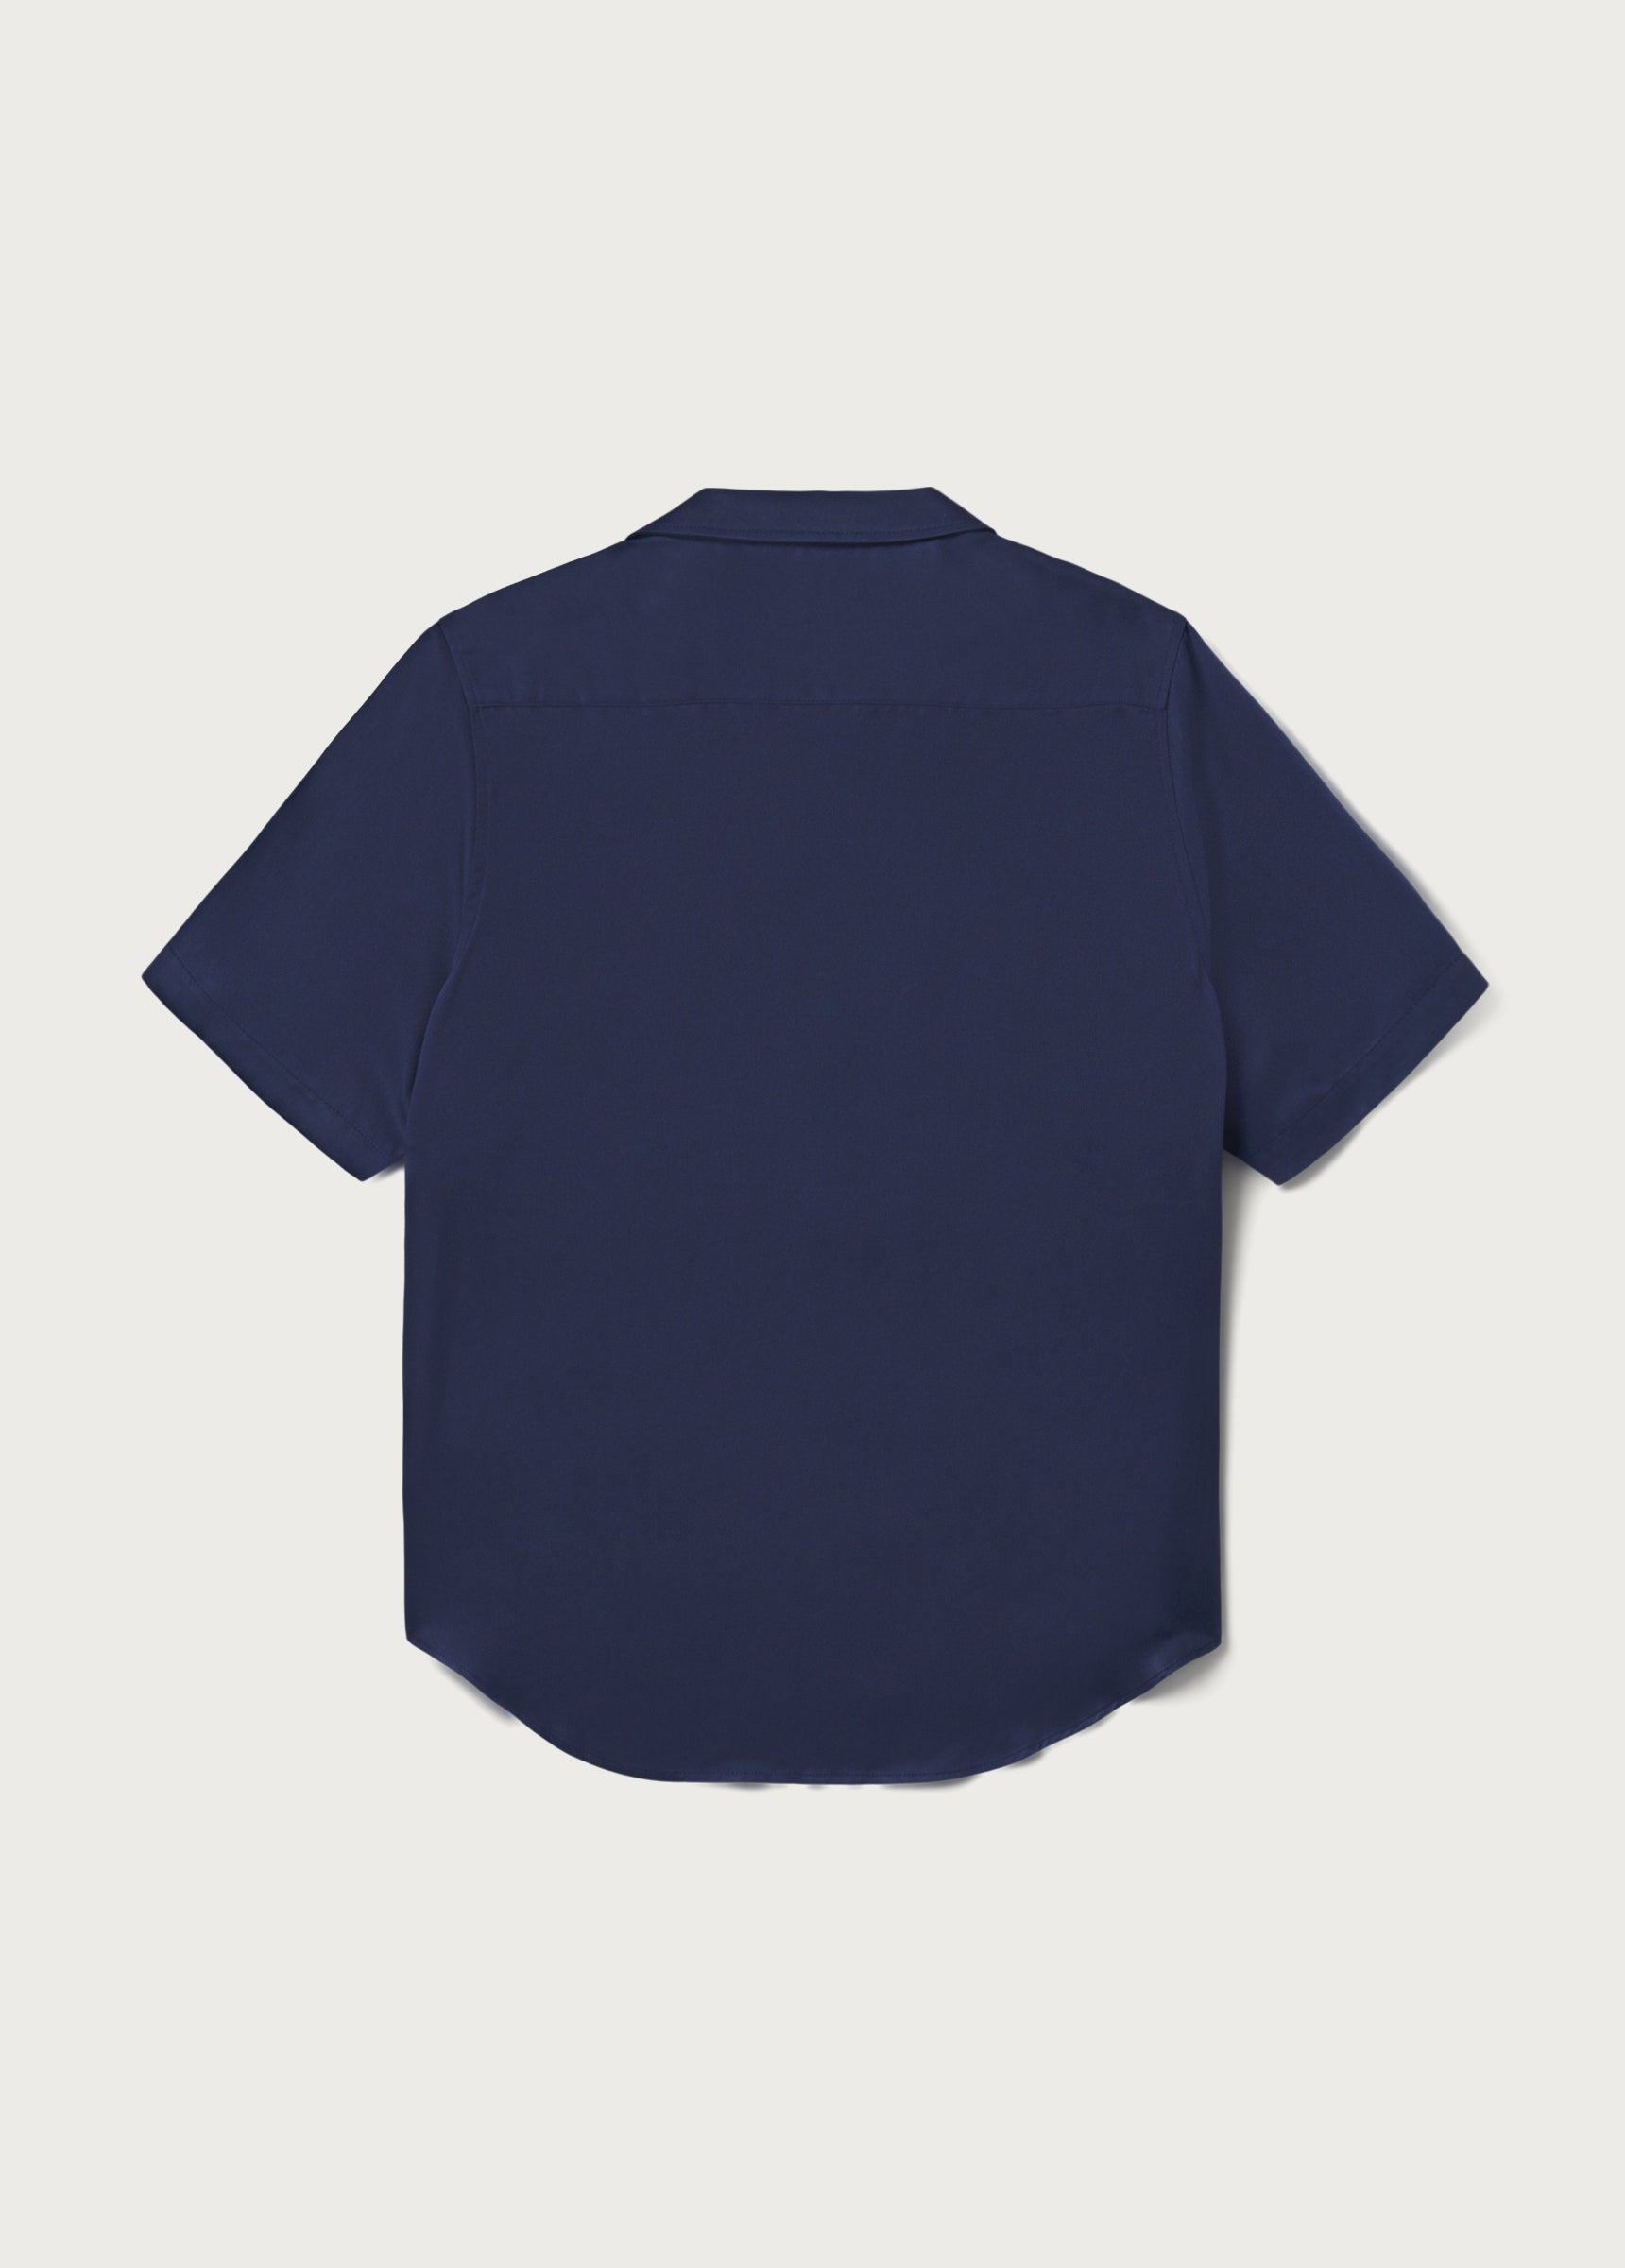 Stalks Camp Shirt | Navy